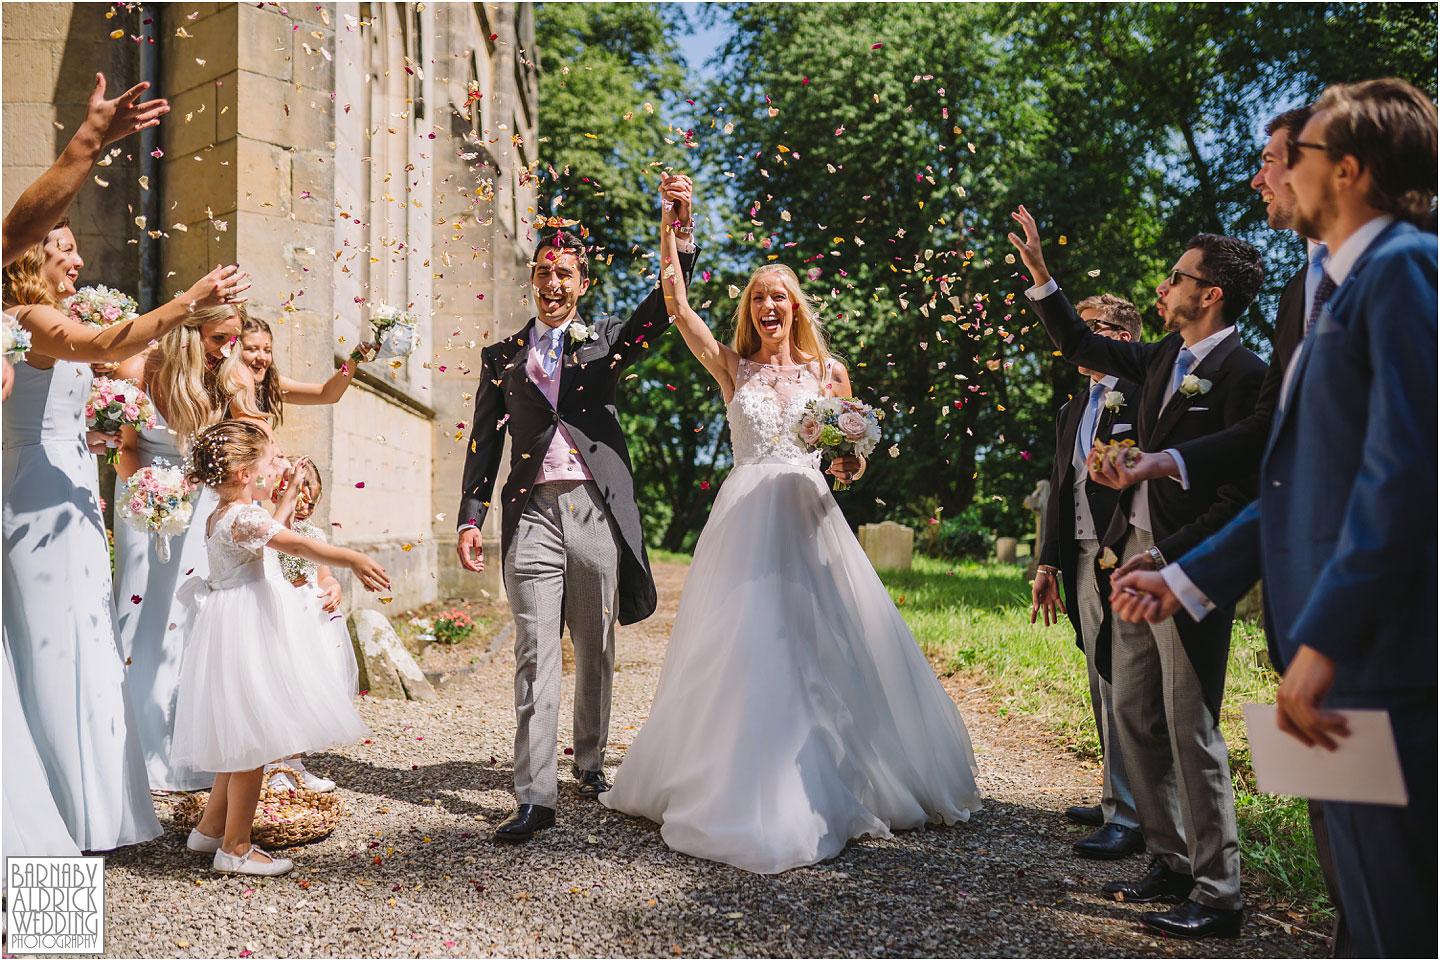 Birdsall House Wedding Photography, Malton Wedding Photographer, Exclusive Yorkshire Wedding Venue